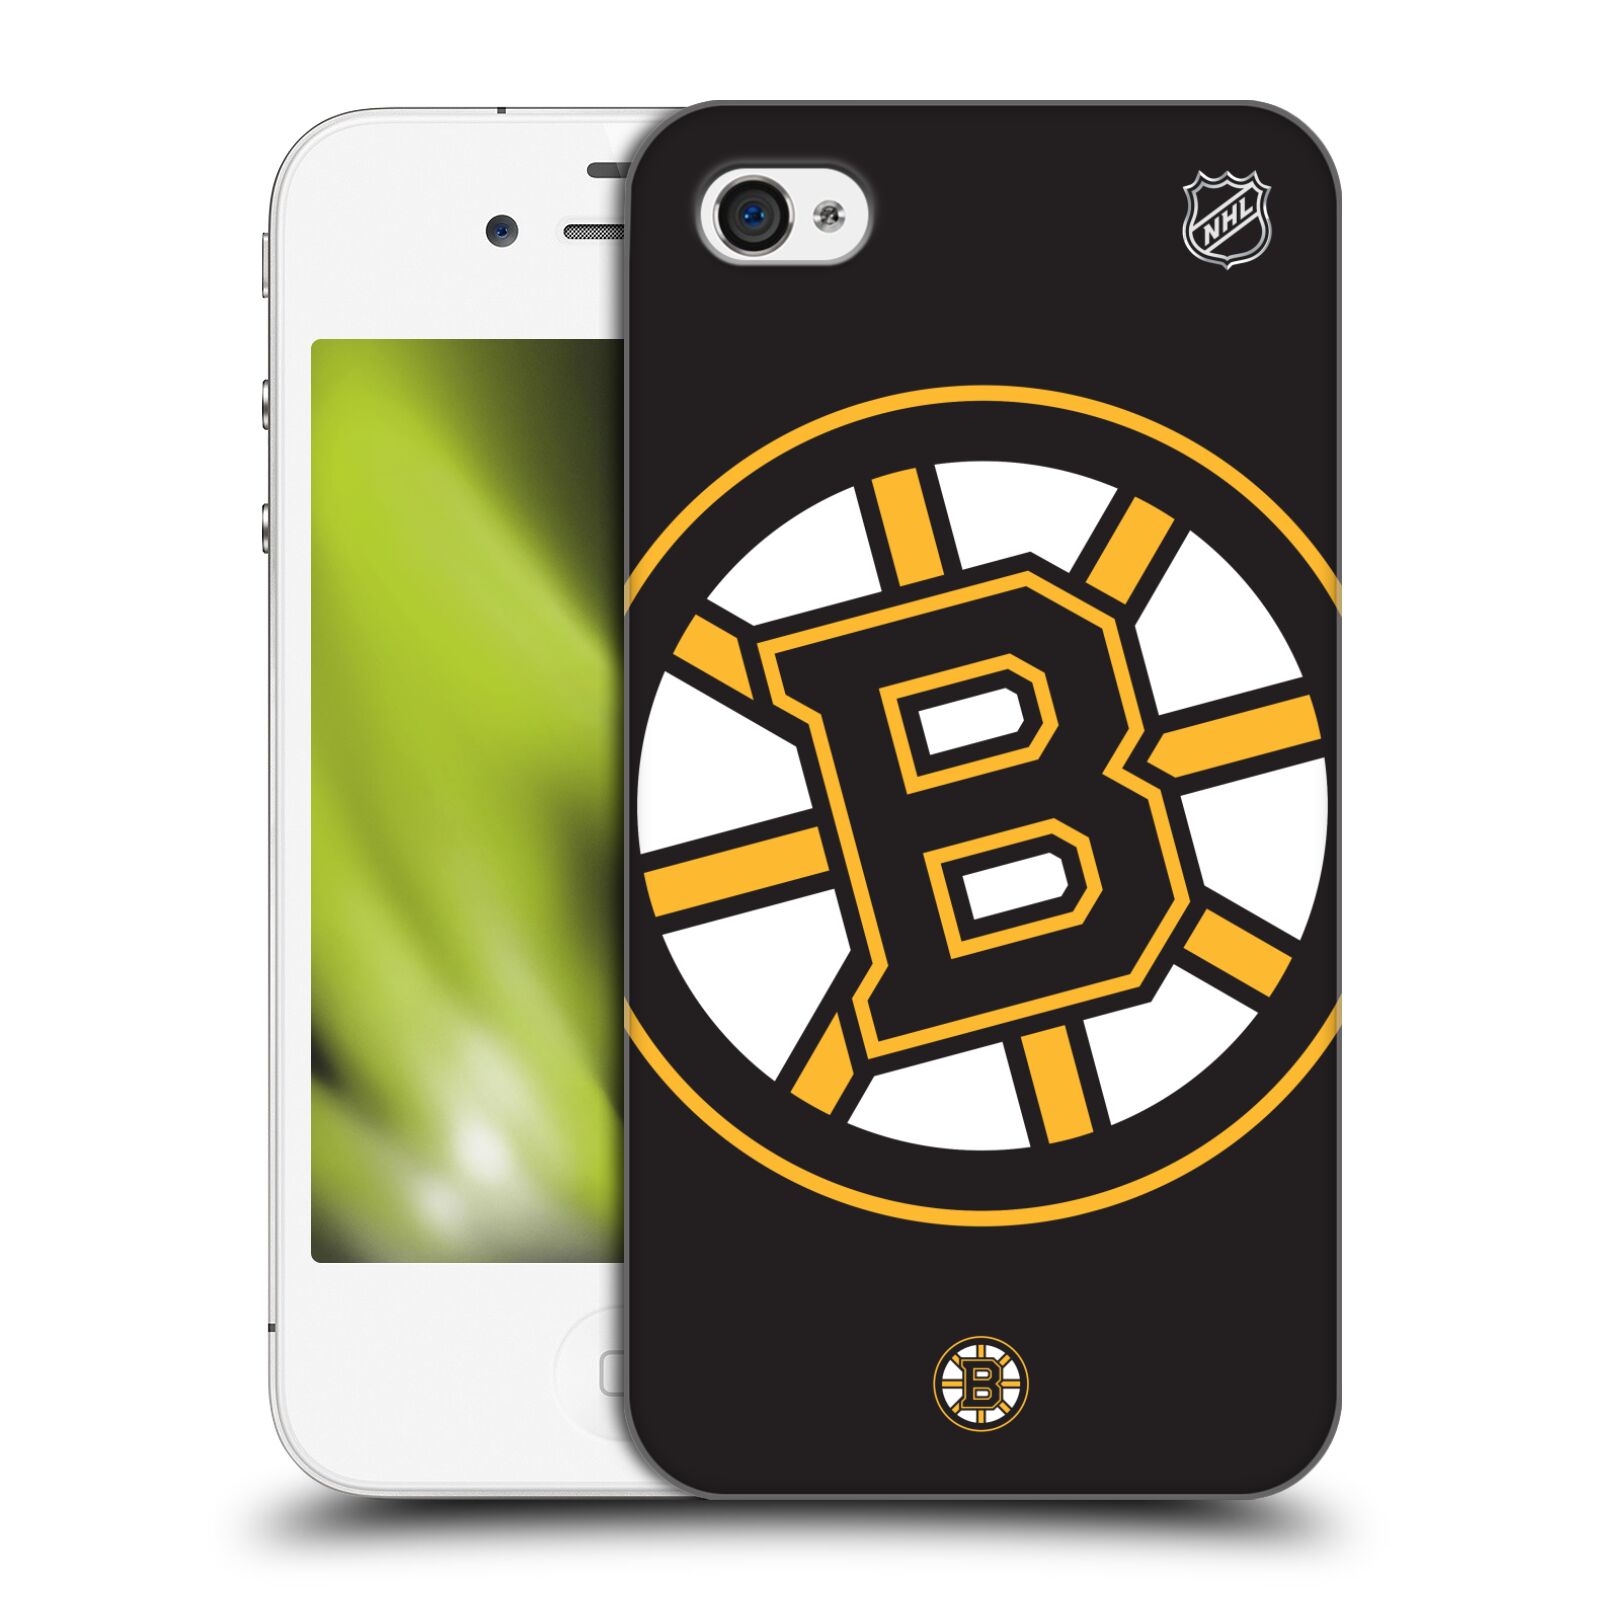 Pouzdro na mobil Apple Iphone 4/4S - HEAD CASE - Hokej NHL - Boston Bruins - velký znak